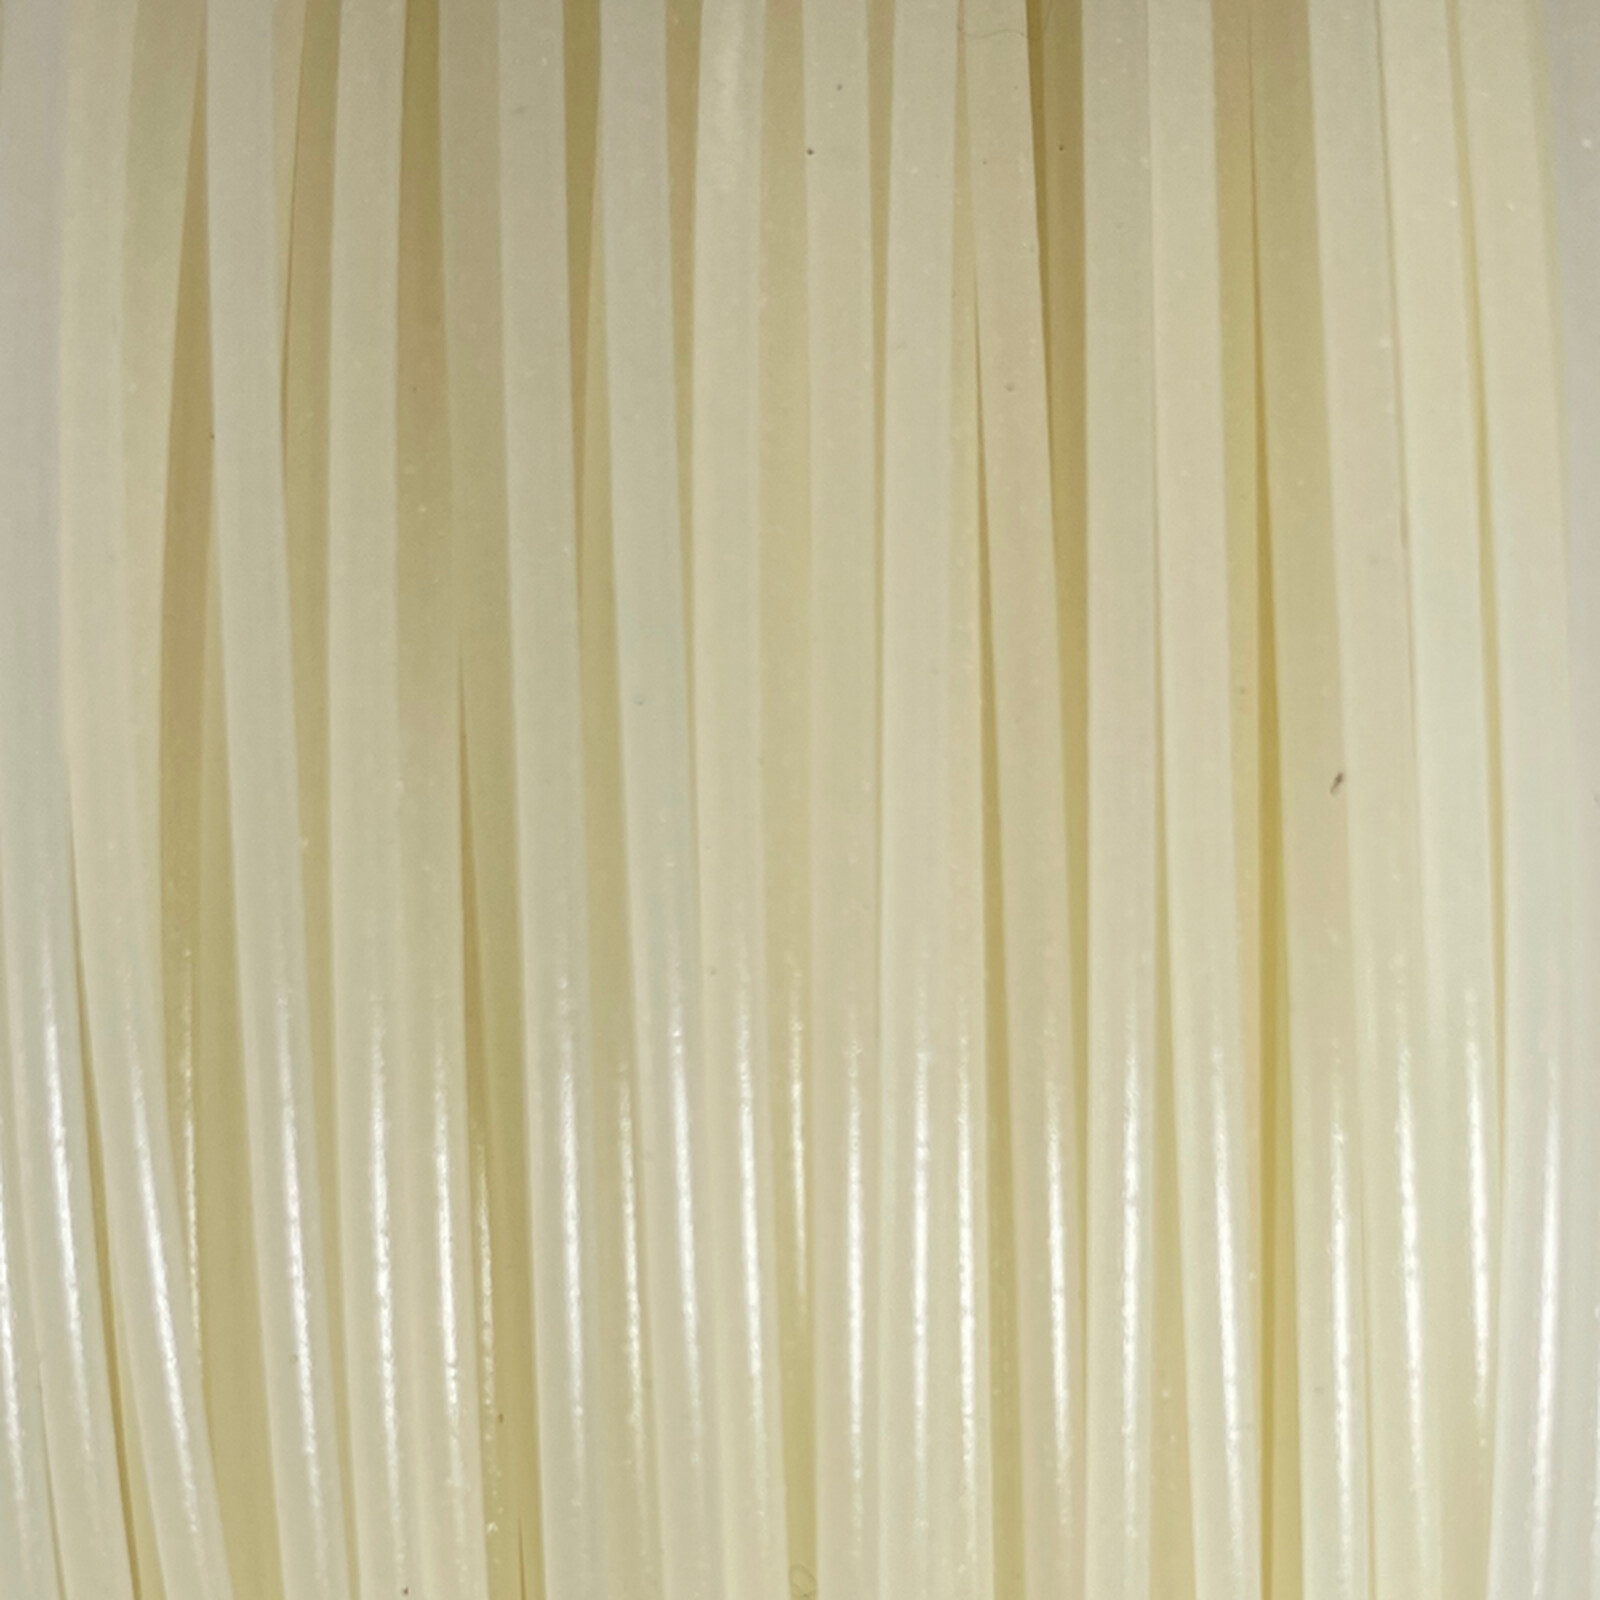 Filament Chromatik PLA 1.75mm - Blanc Perle (750g)